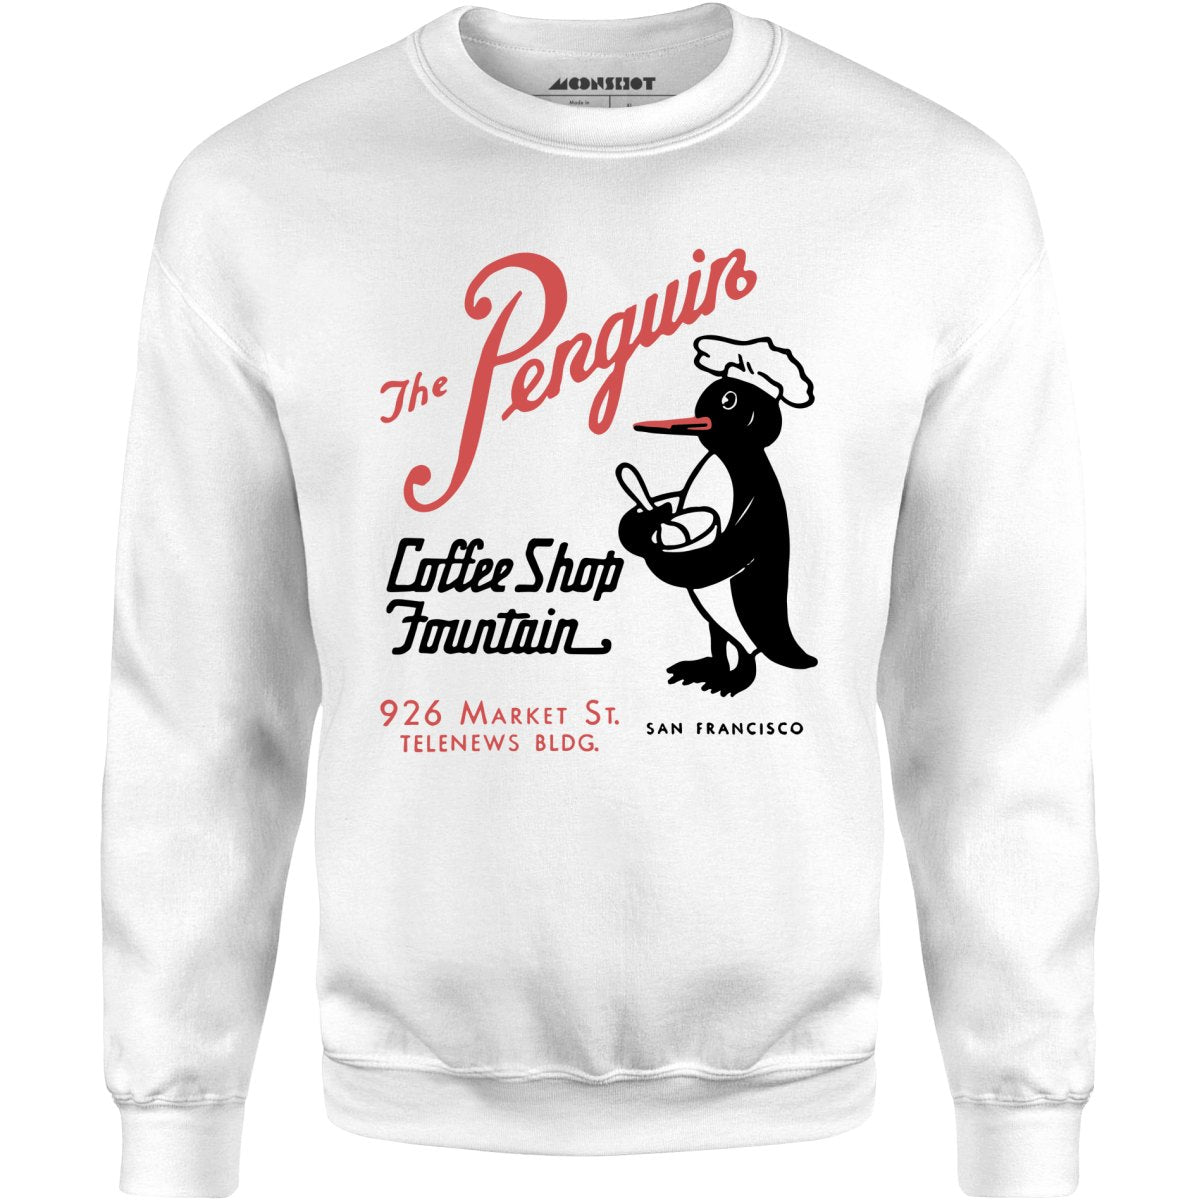 The Penguin - San Francisco, CA - Vintage Restaurant - Unisex Sweatshirt